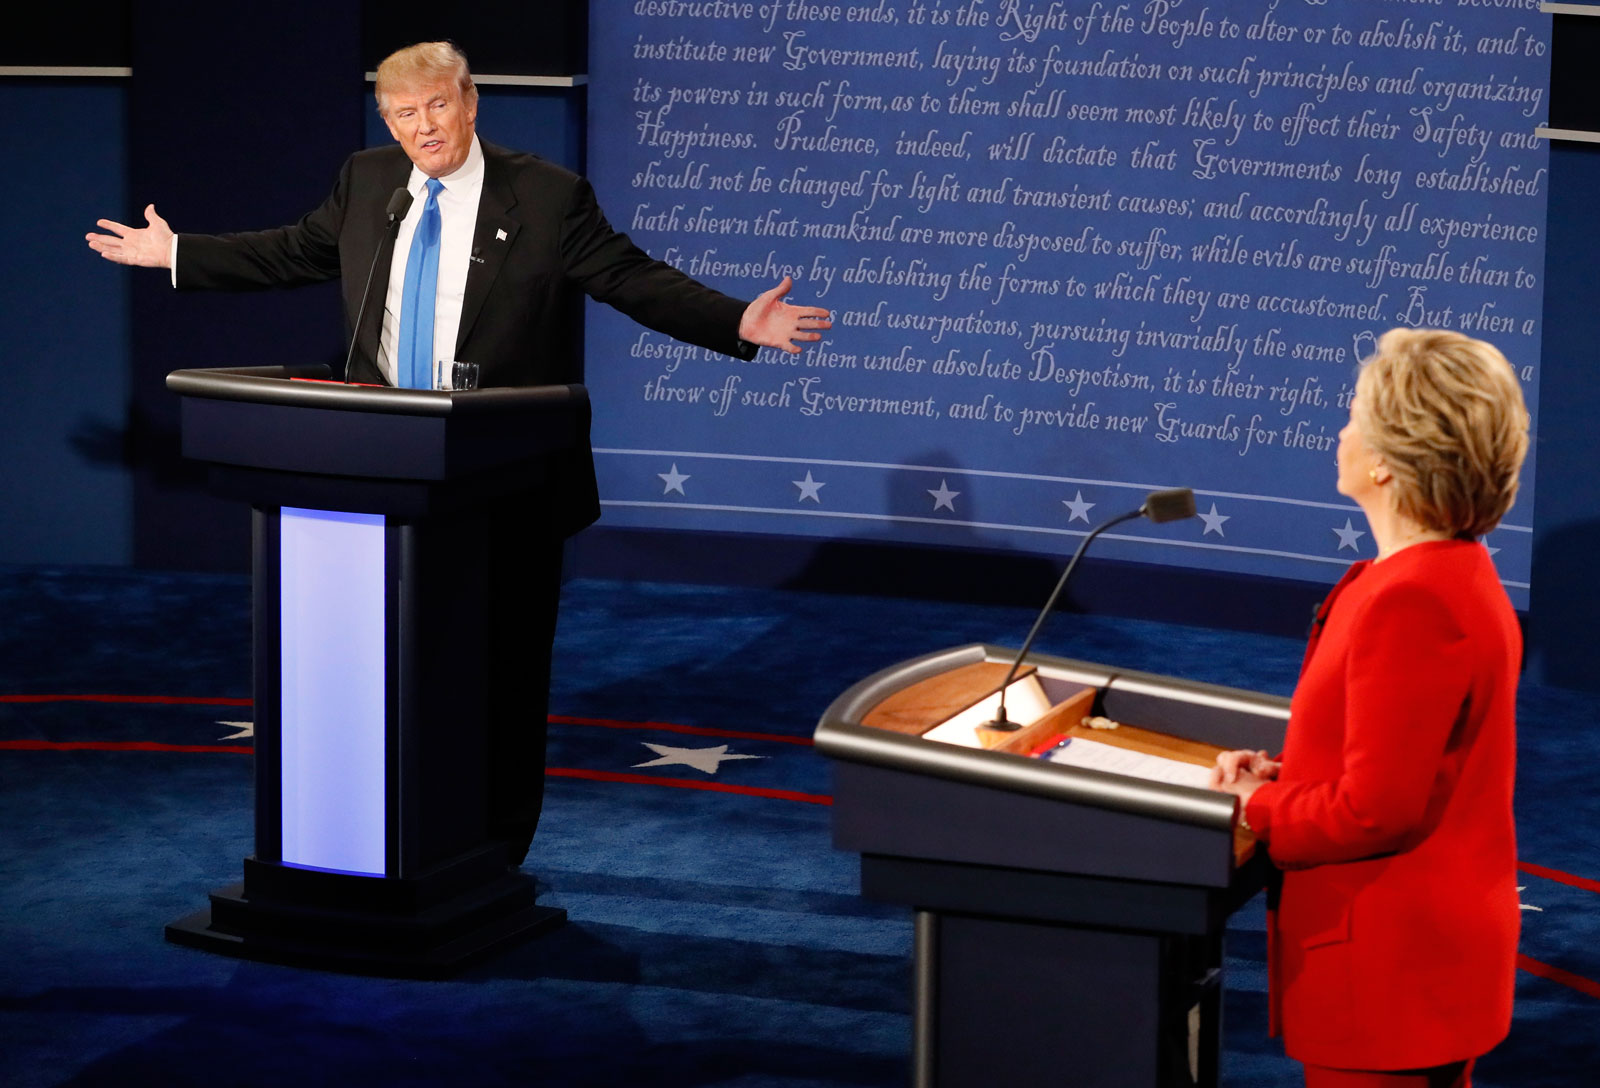 Donald Trump and Hillary Clinton during the debate at Hofstra University, Hempstead, New York, September 26, 2016 